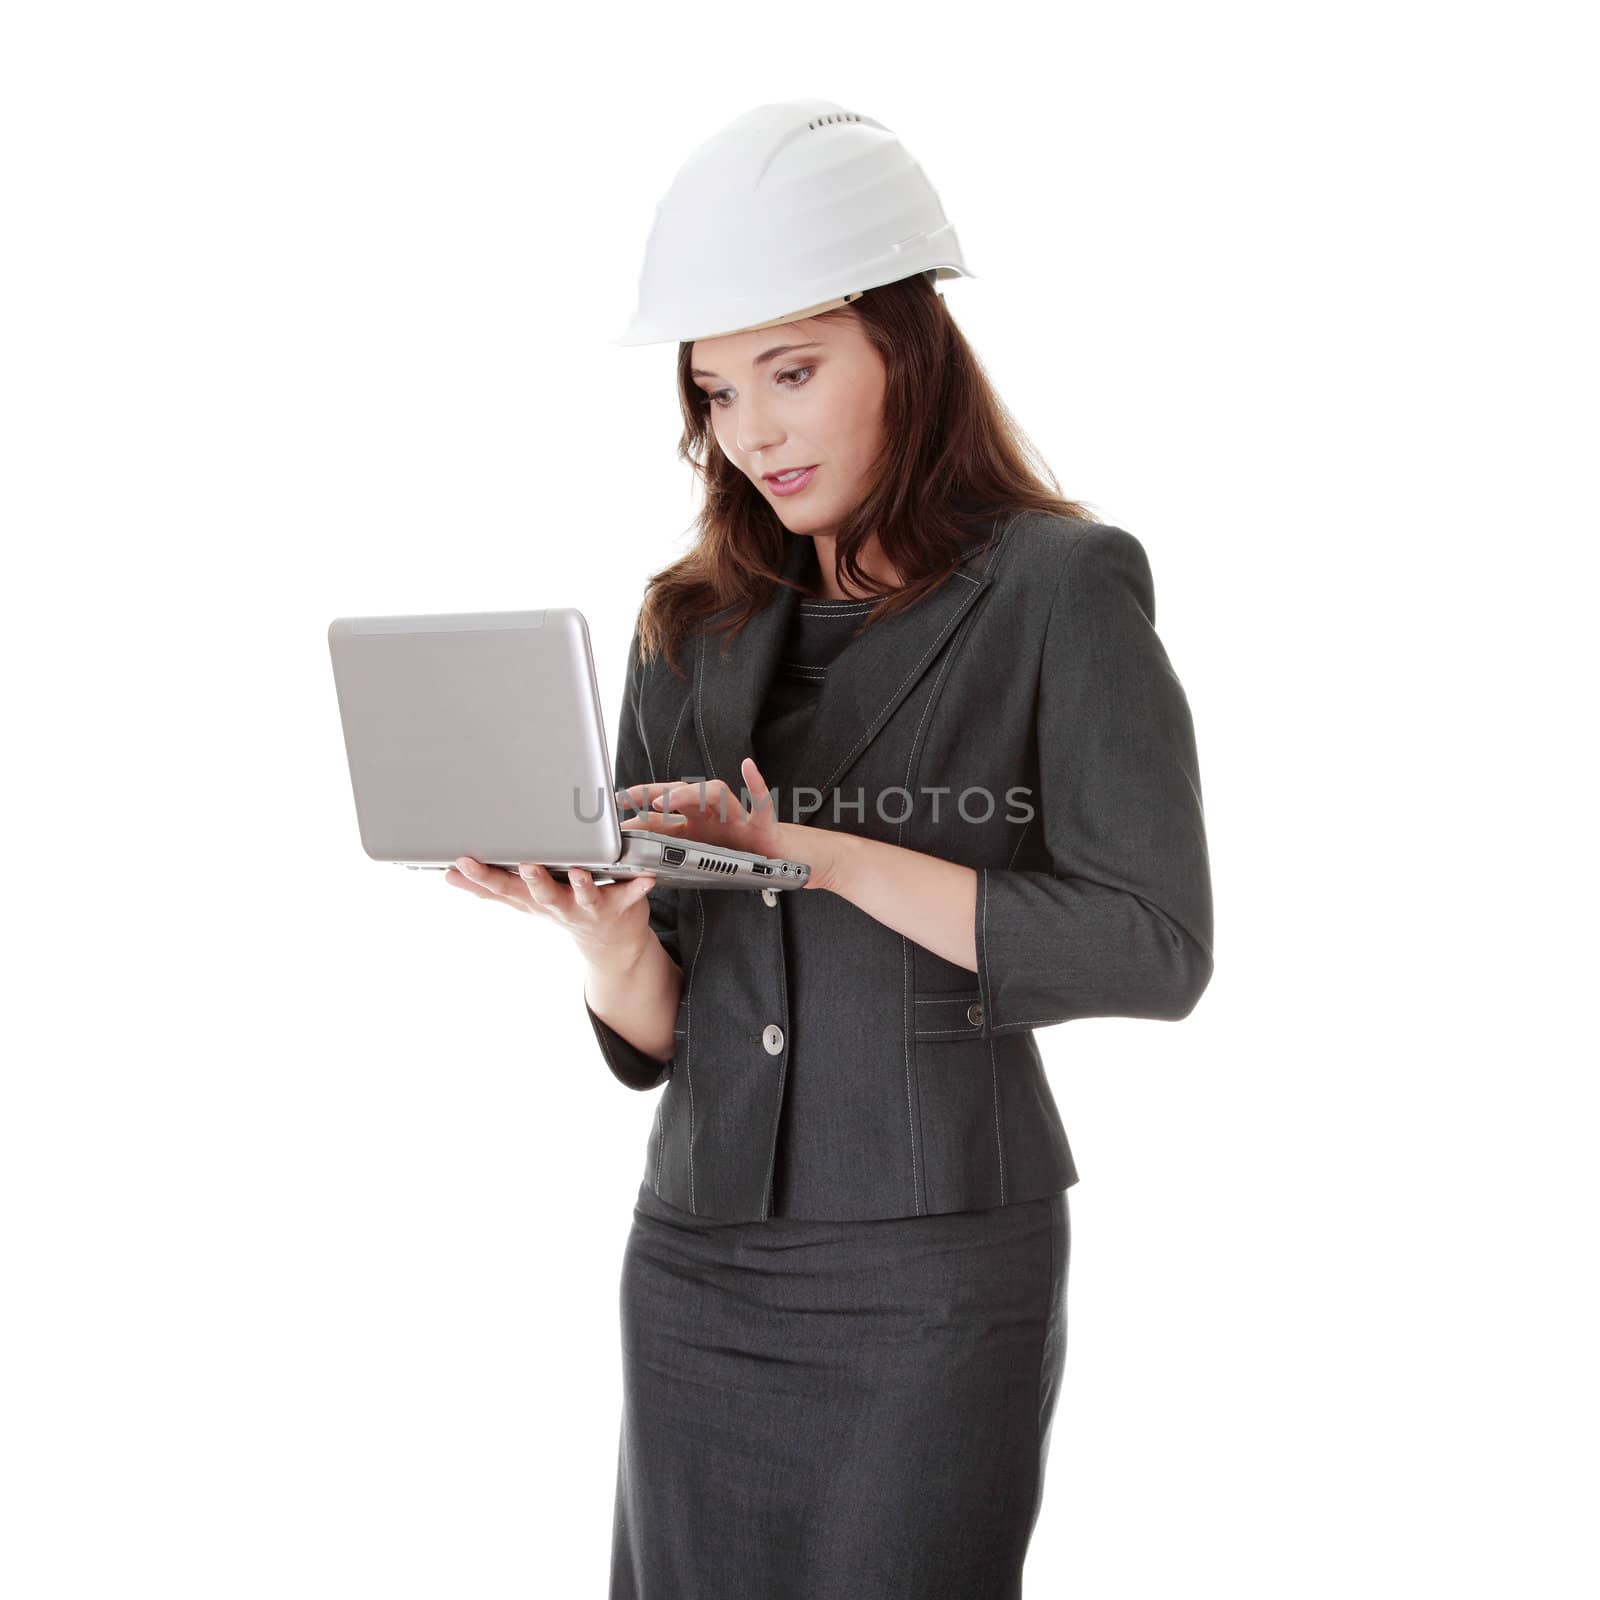 Smiling young female architect holding small laptop, isolated on white background